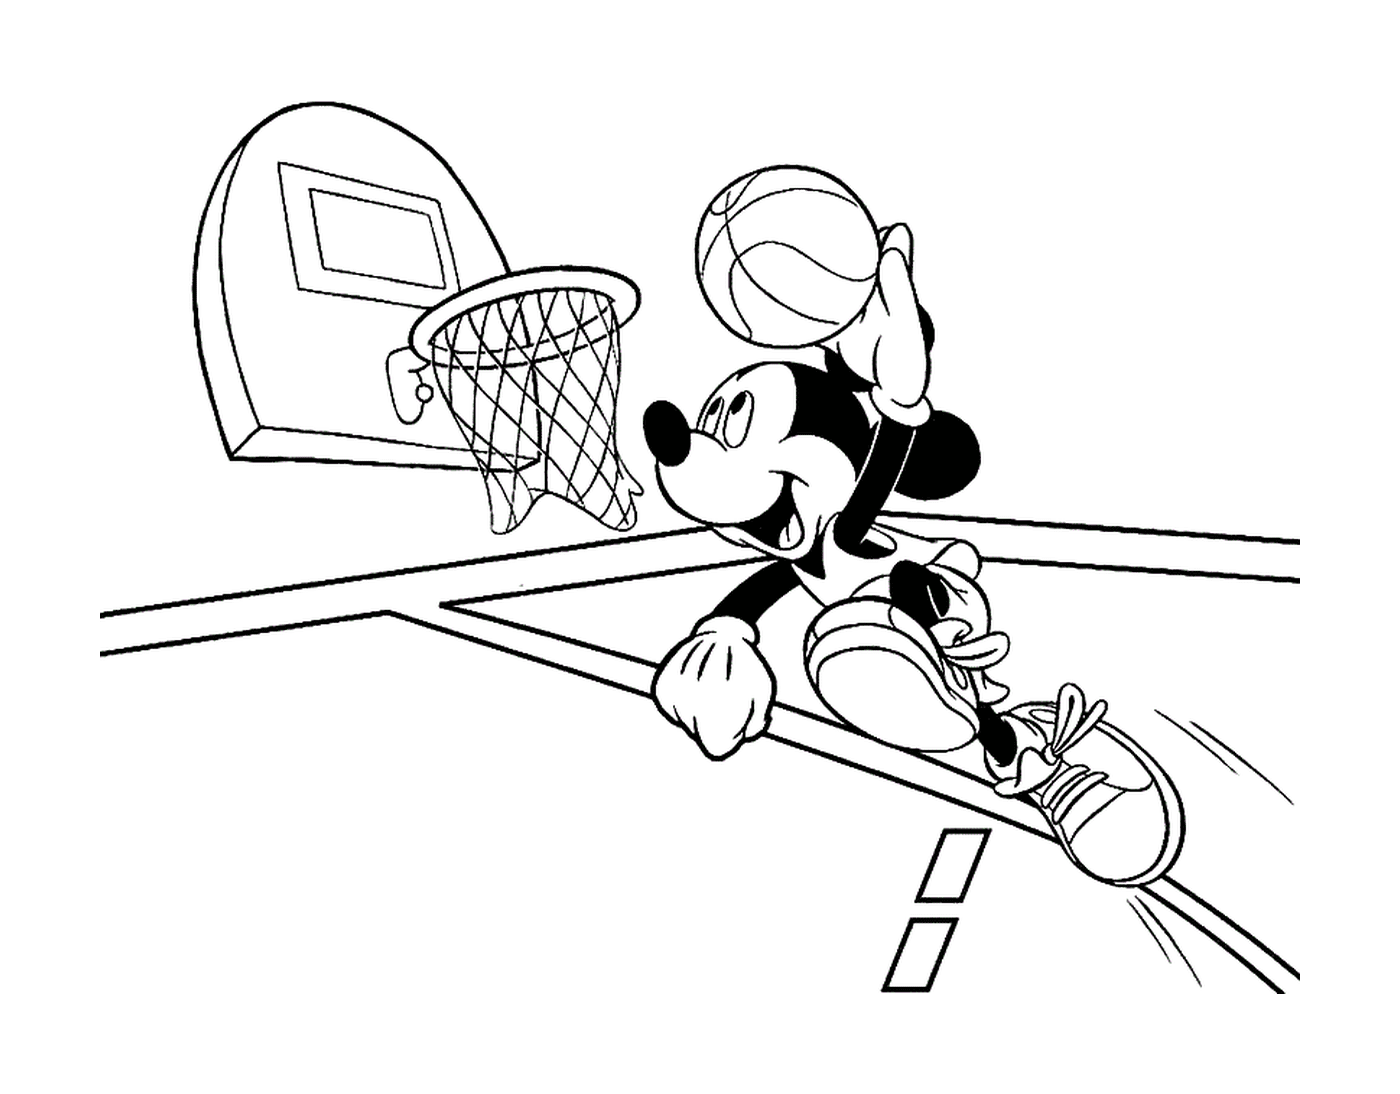  Mickey joga basquete com menino 